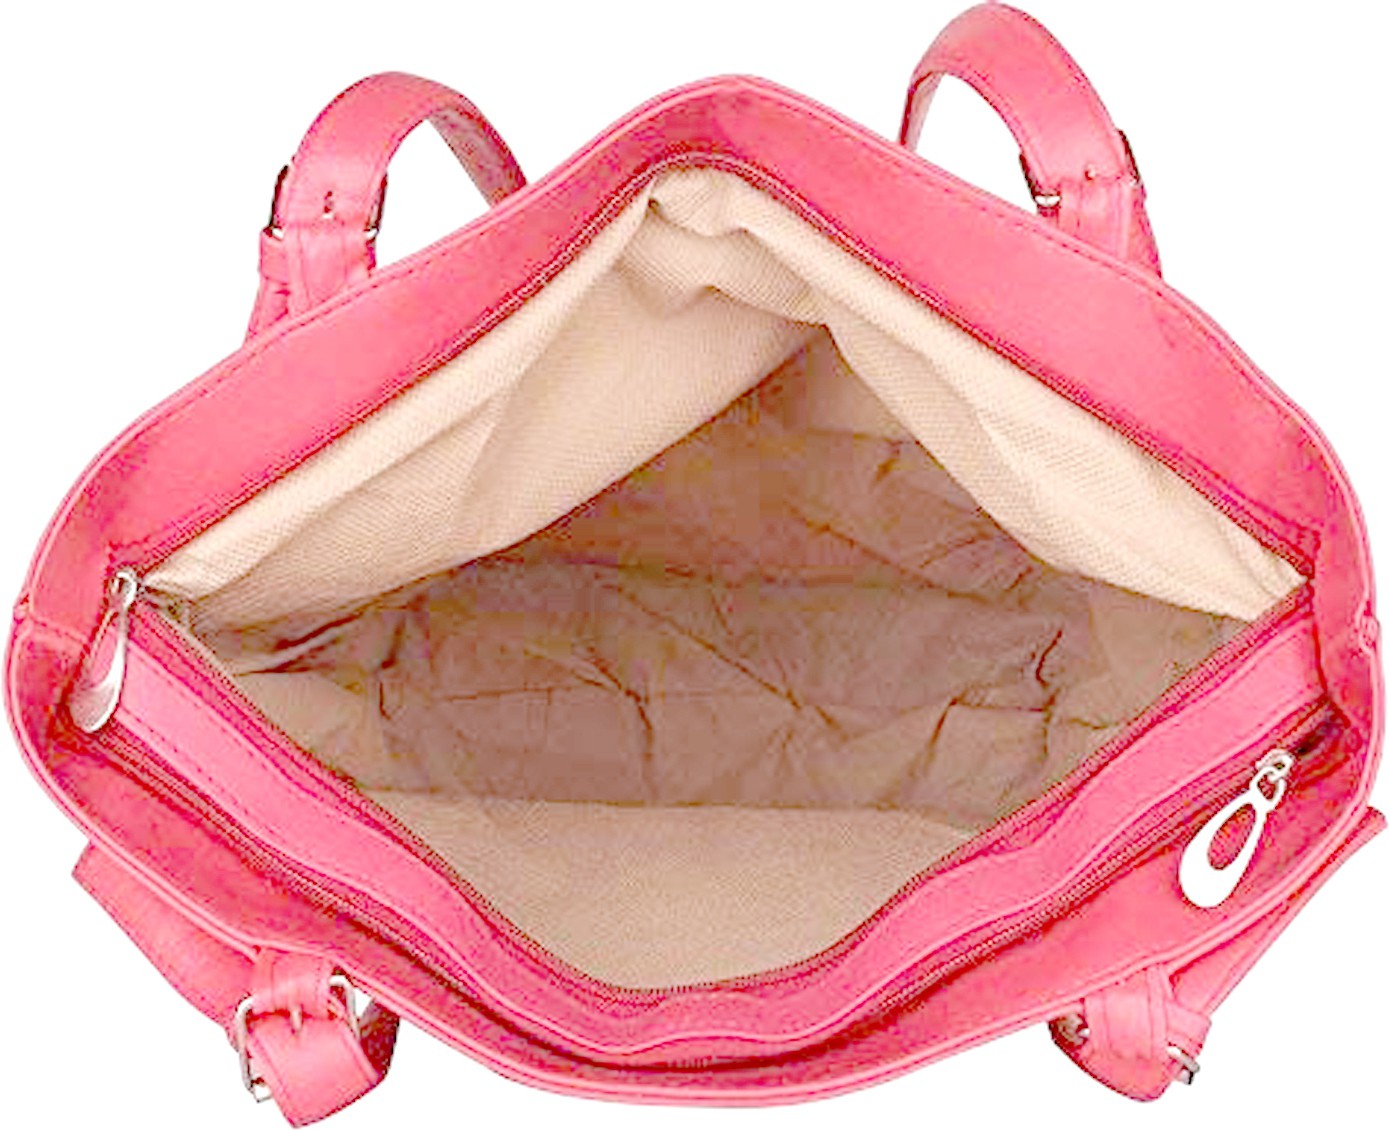 Ruby Shoulder Bag - White Croc - JW PEI